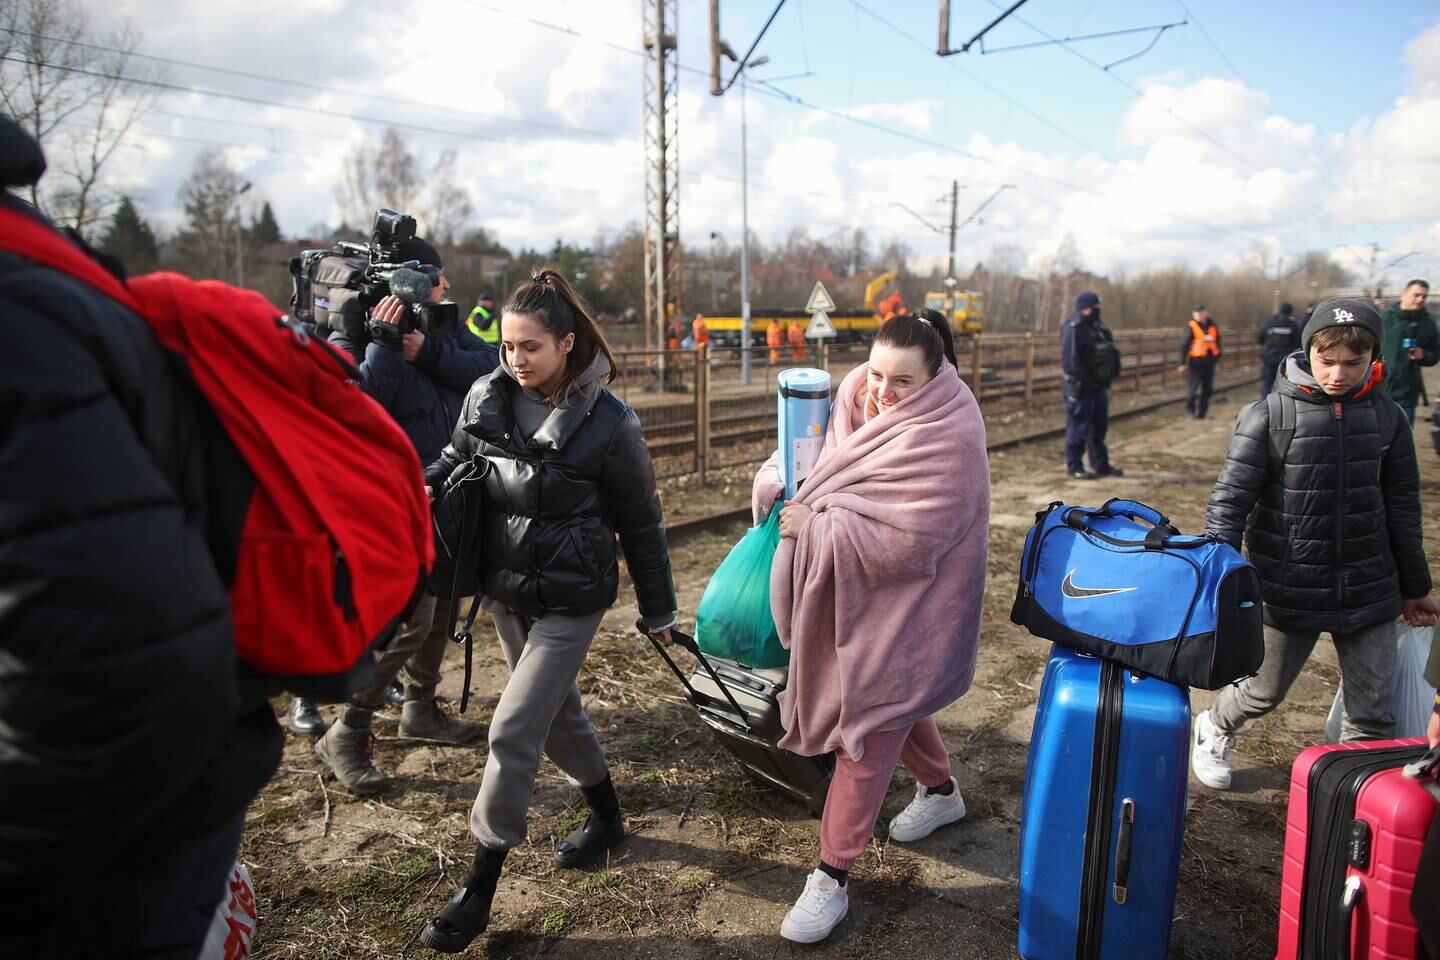 Ukrainians arrive in Olkusz, Poland, after taking a train from Lviv, western Ukraine. EPA / POLAND OUT